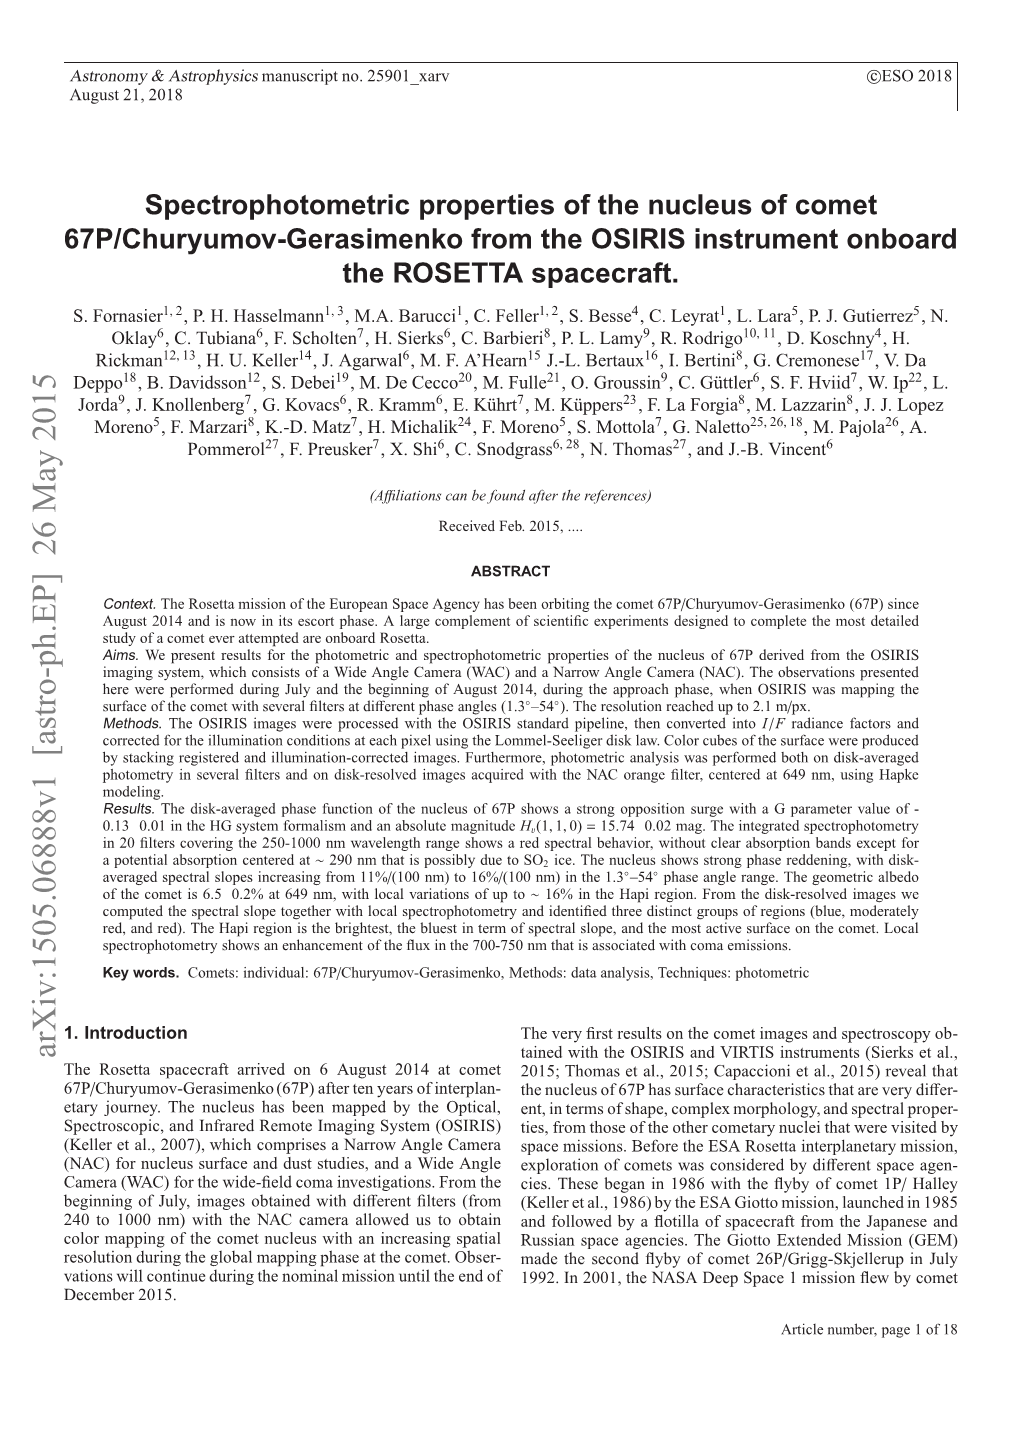 Spectrophotometric Properties of the Nucleus of Comet 67P/Churyumov